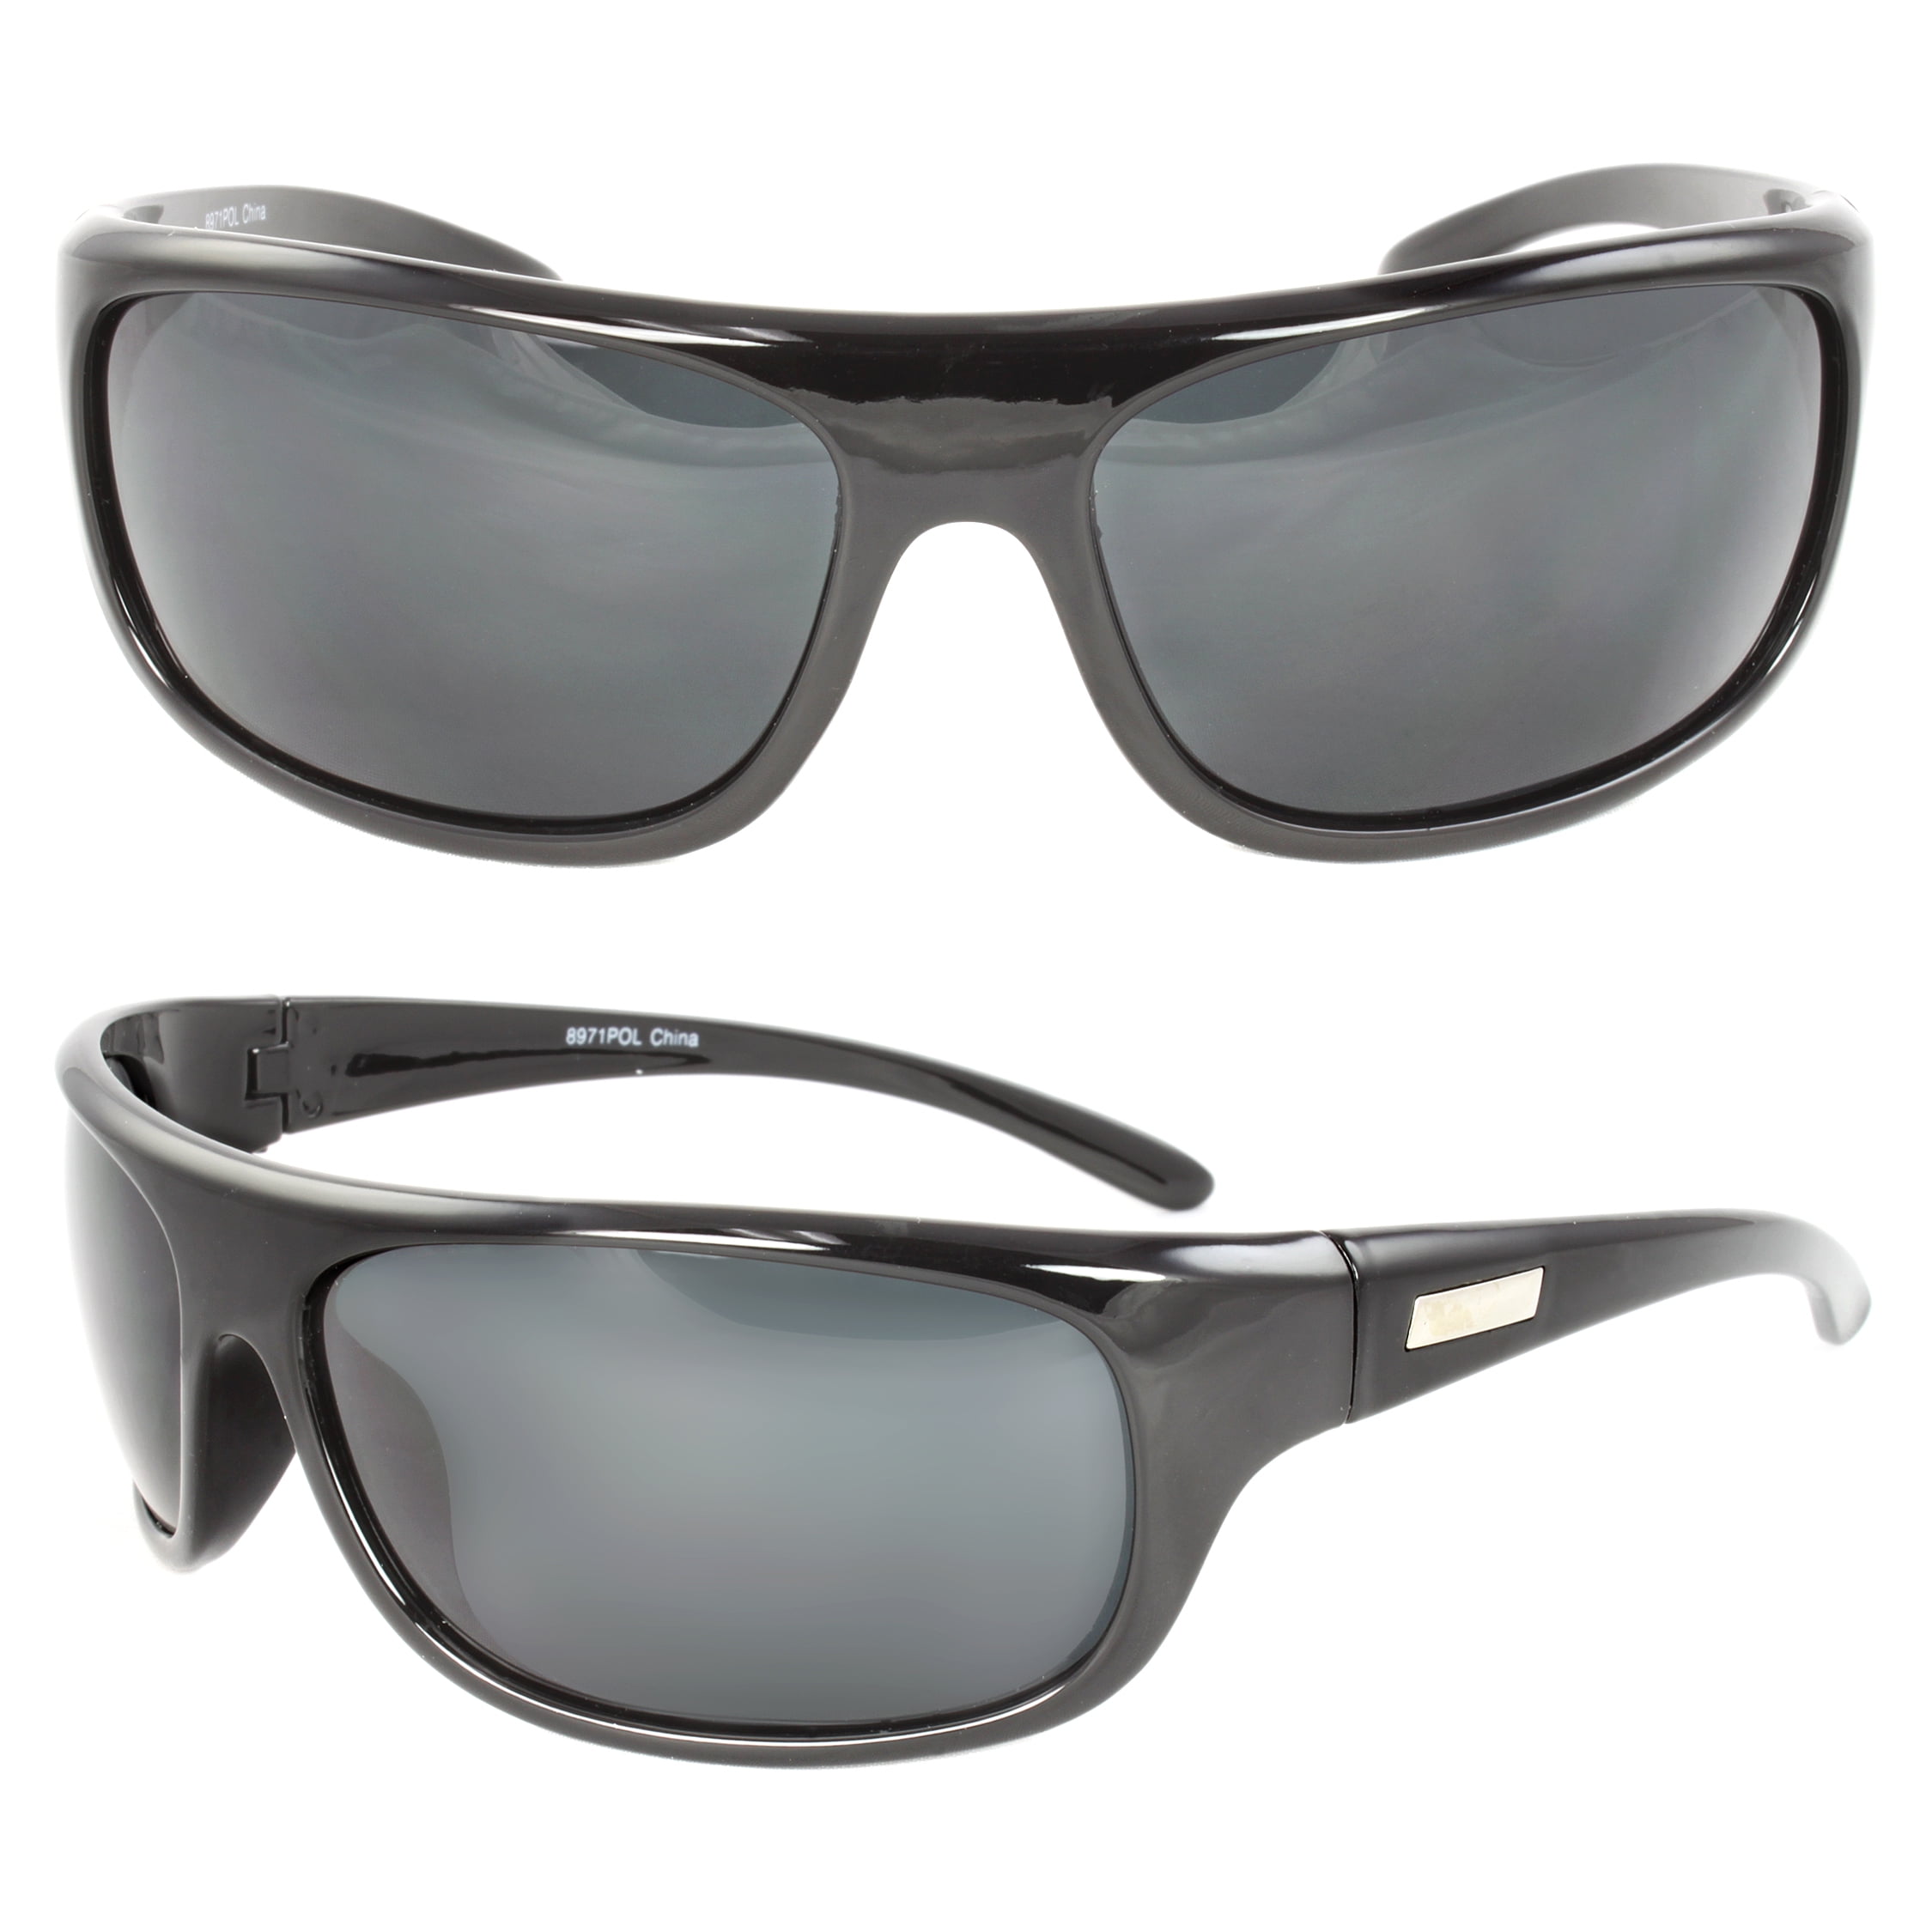 POLARIZED Sunglasses Mens Wrap Fishing Driving Glasses Green Lens Black Frame 